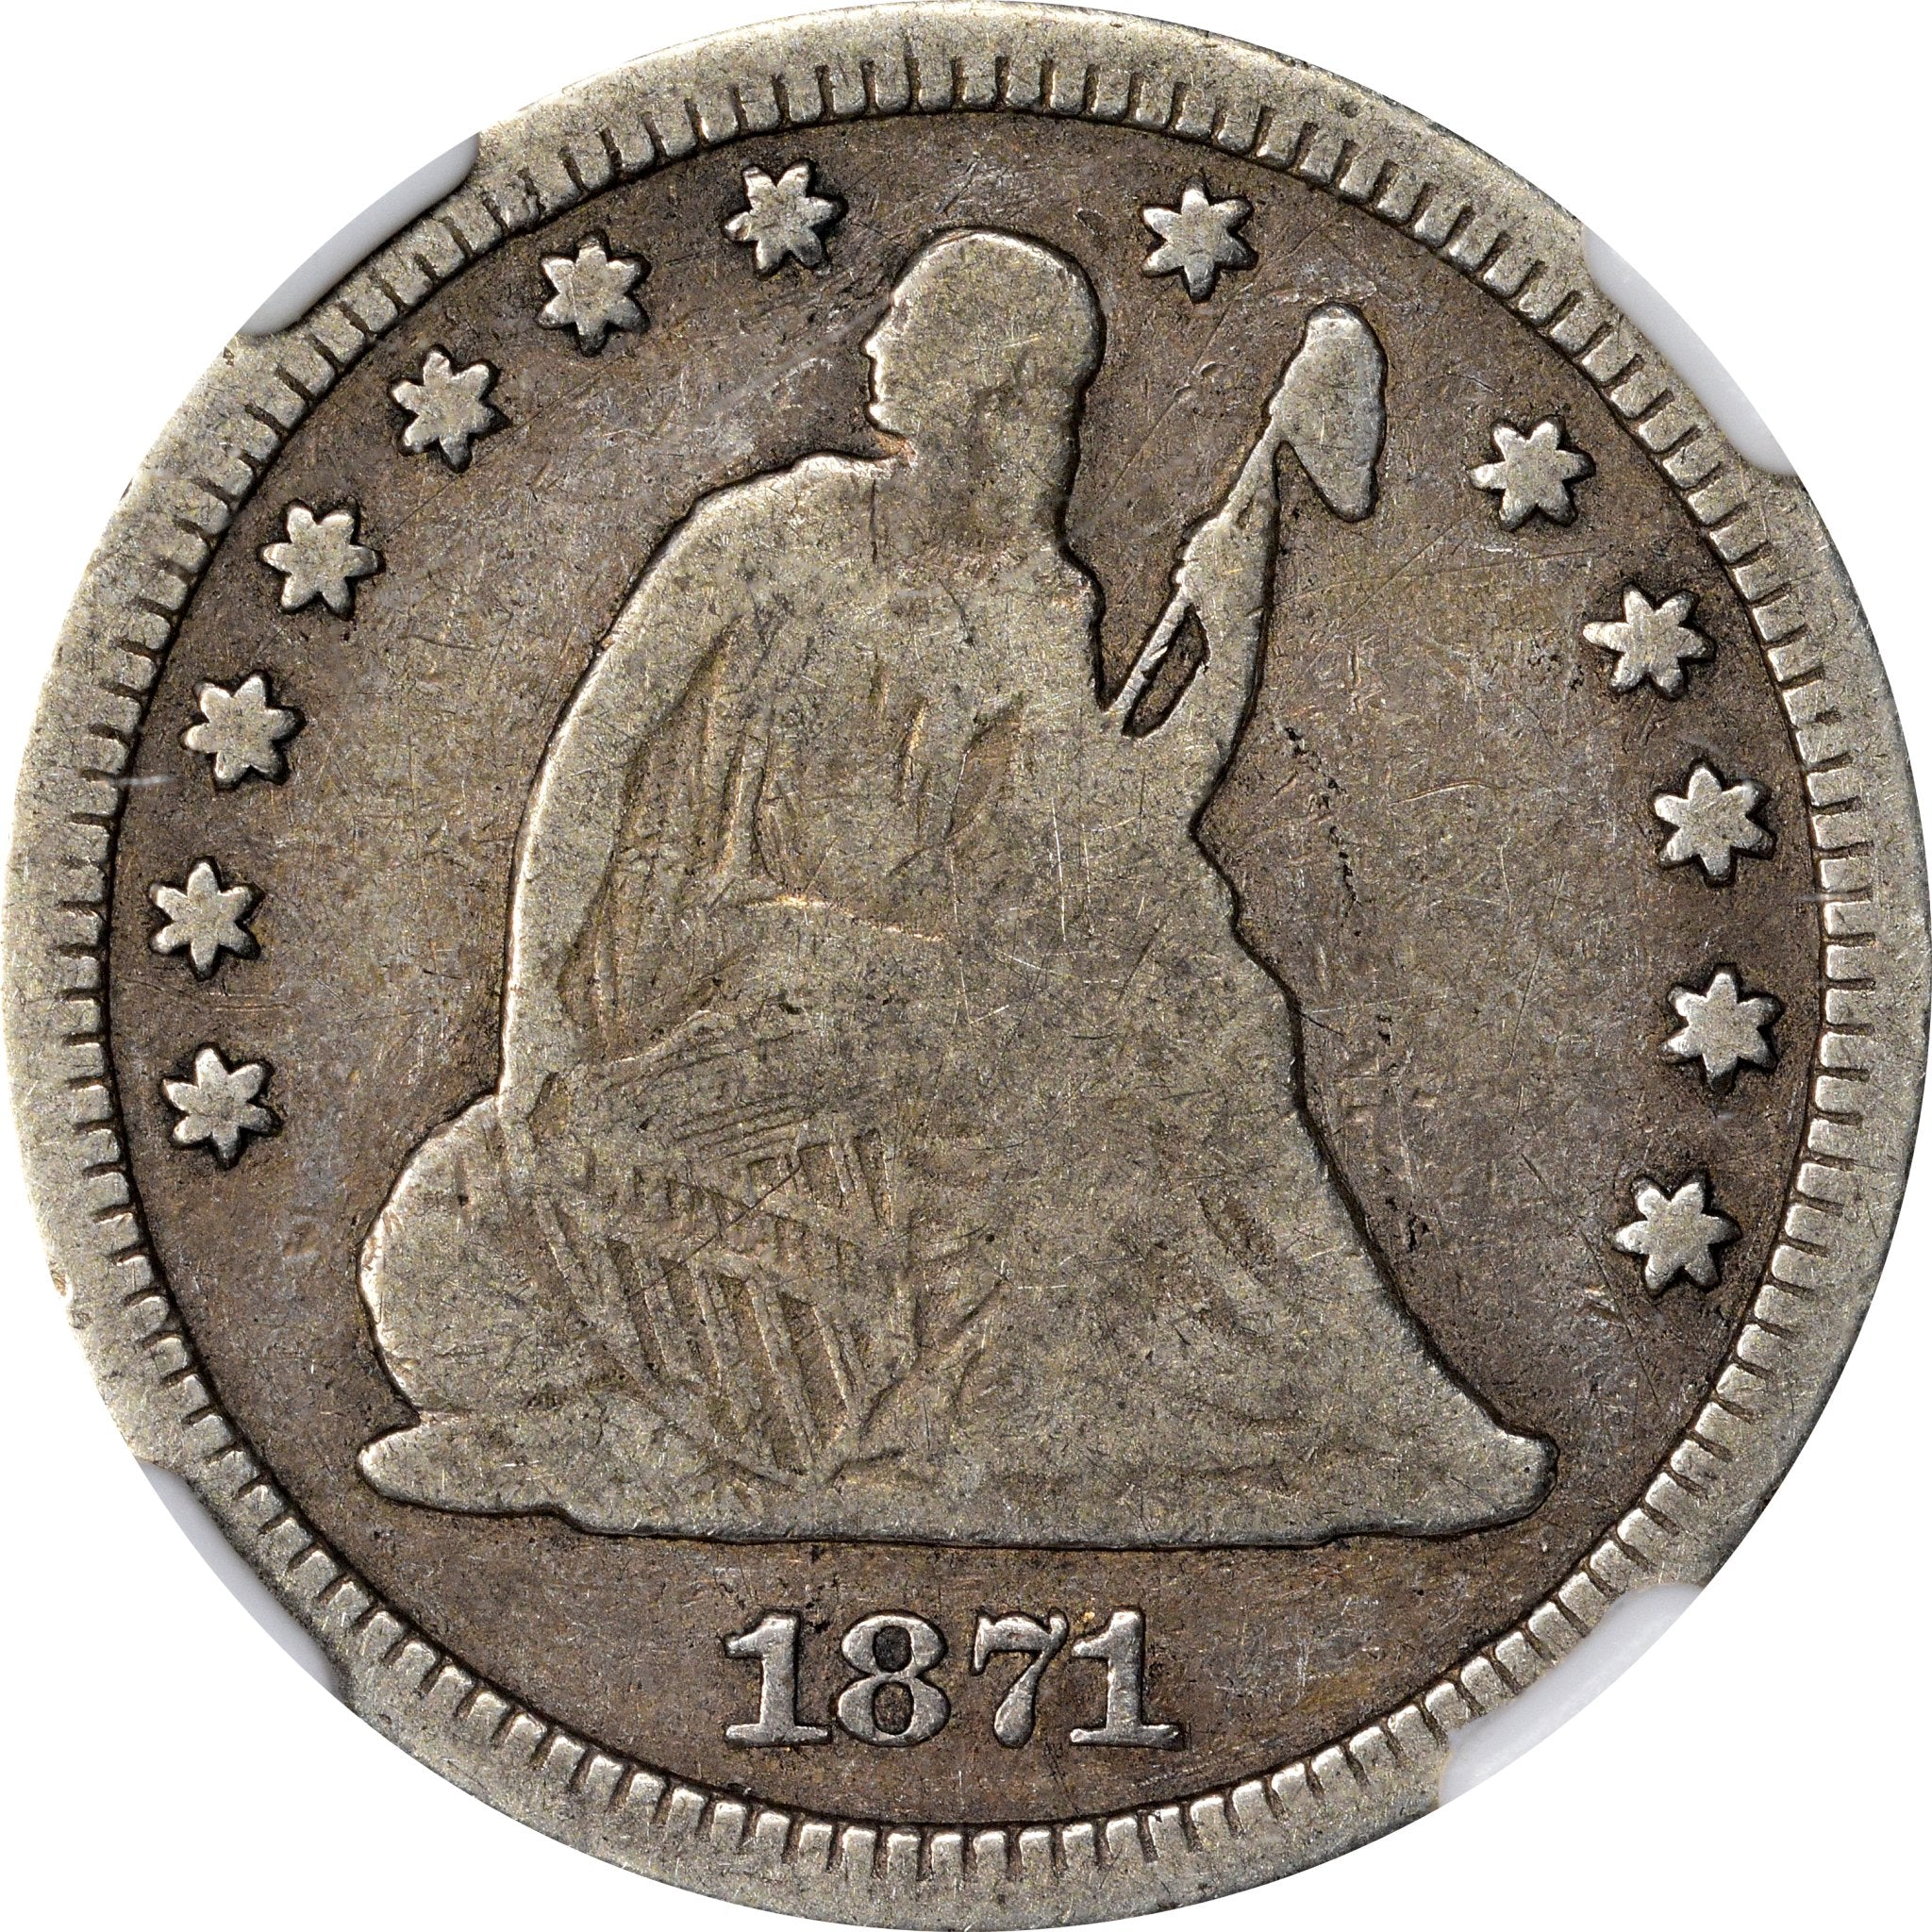 1871-CC 25C VG10 NGC - Paradime Coins | PCGS NGC CACG CAC Rare US Numismatic Coins For Sale